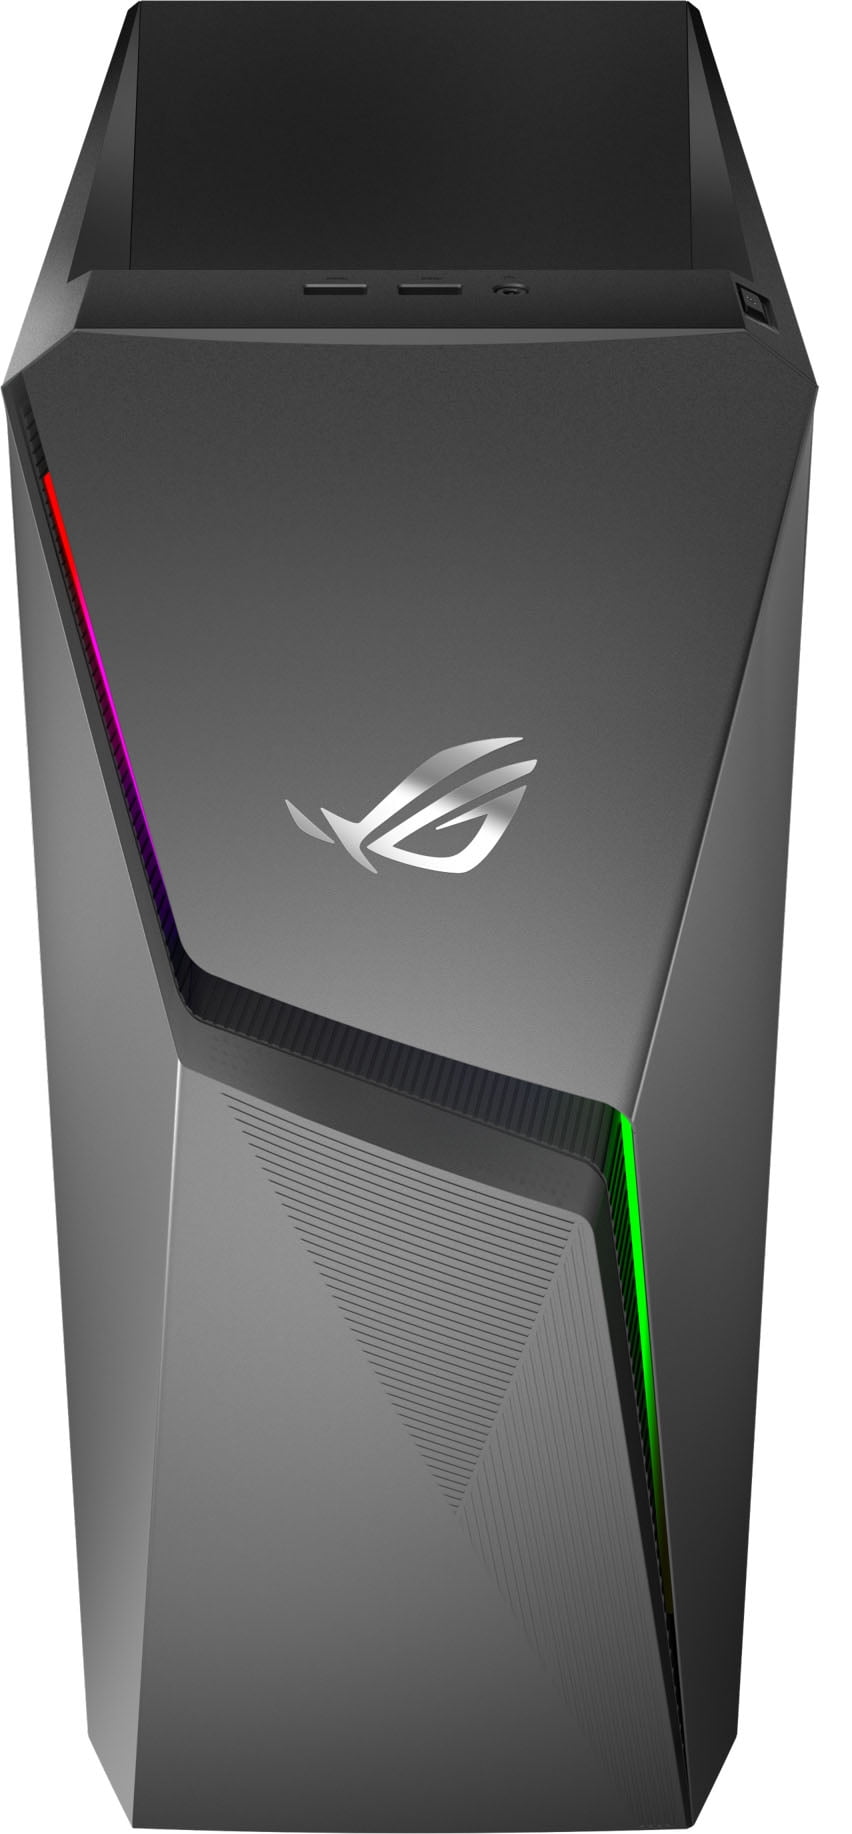 ASUS ROG Strix G10 Gaming & Entertainment Desktop PC (AMD Ryzen 7